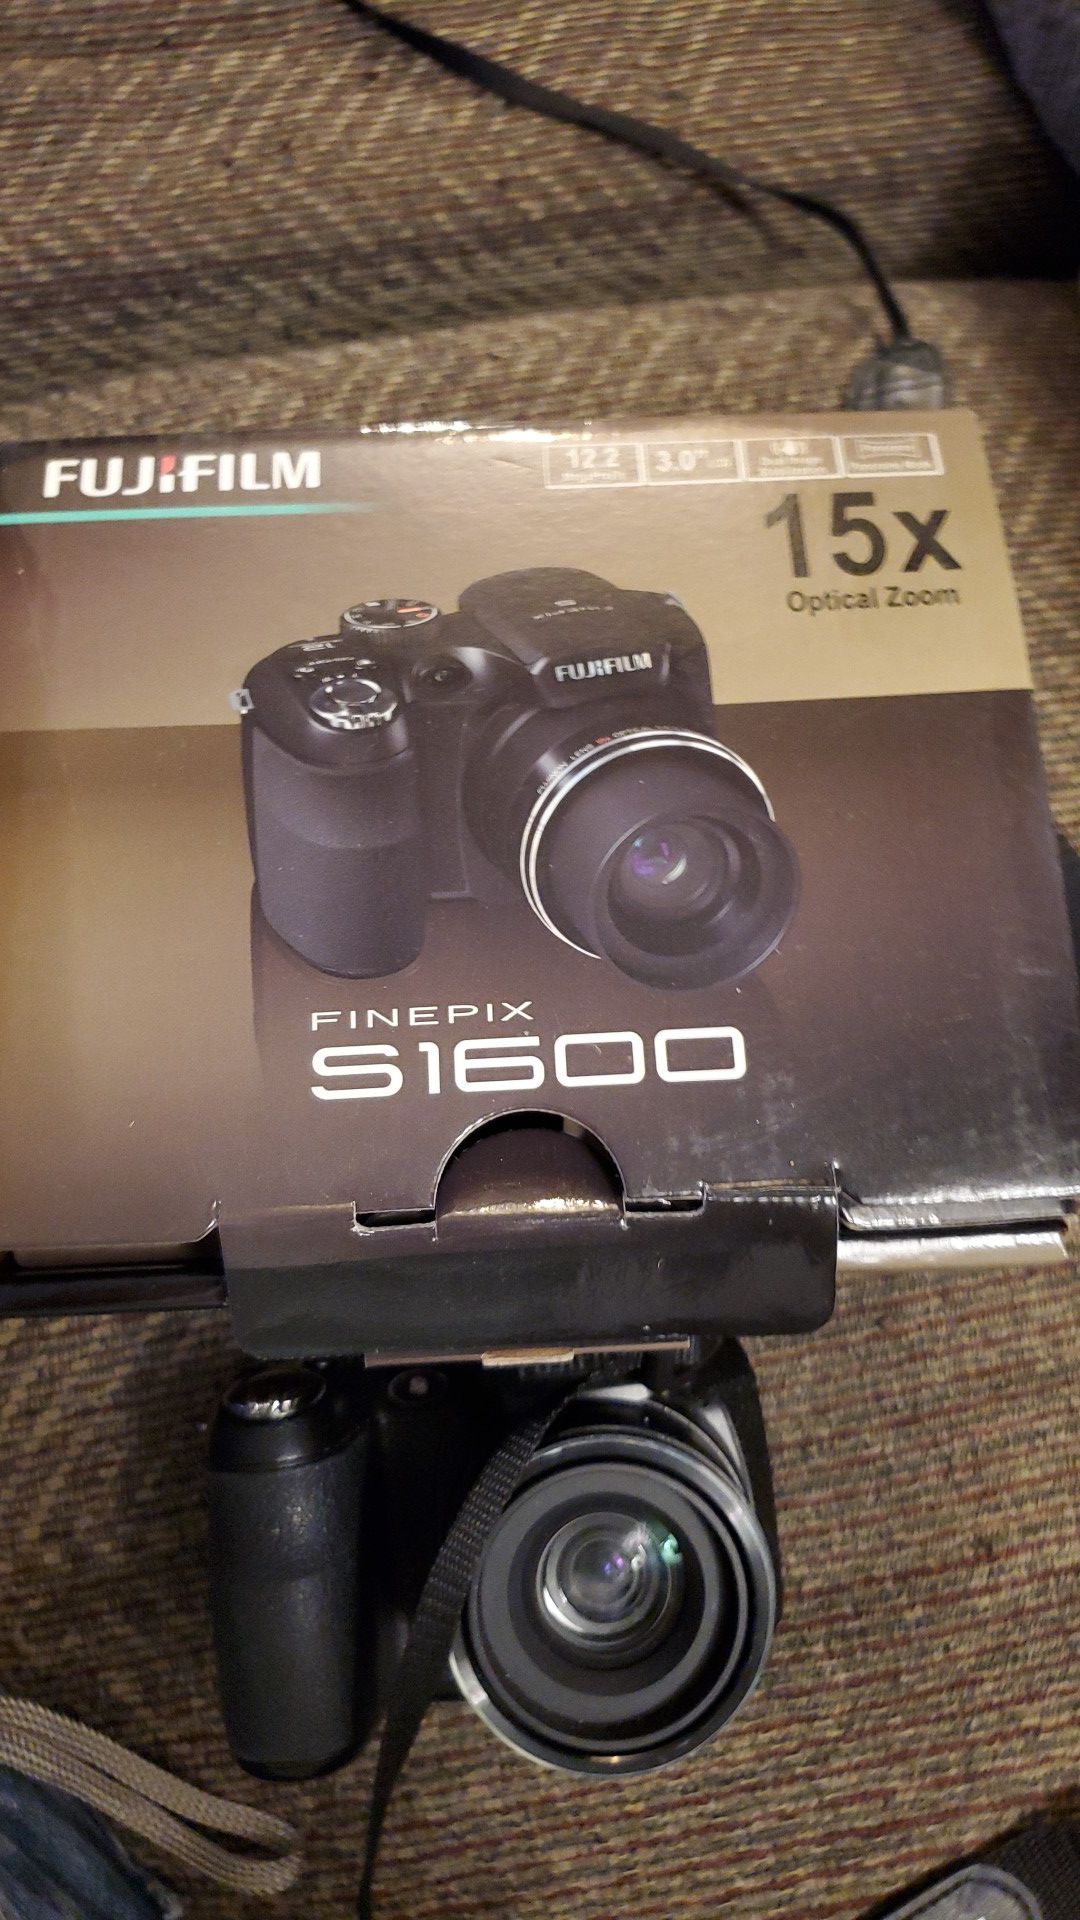 Fujifilm Finepix s1600 digital camera works great!